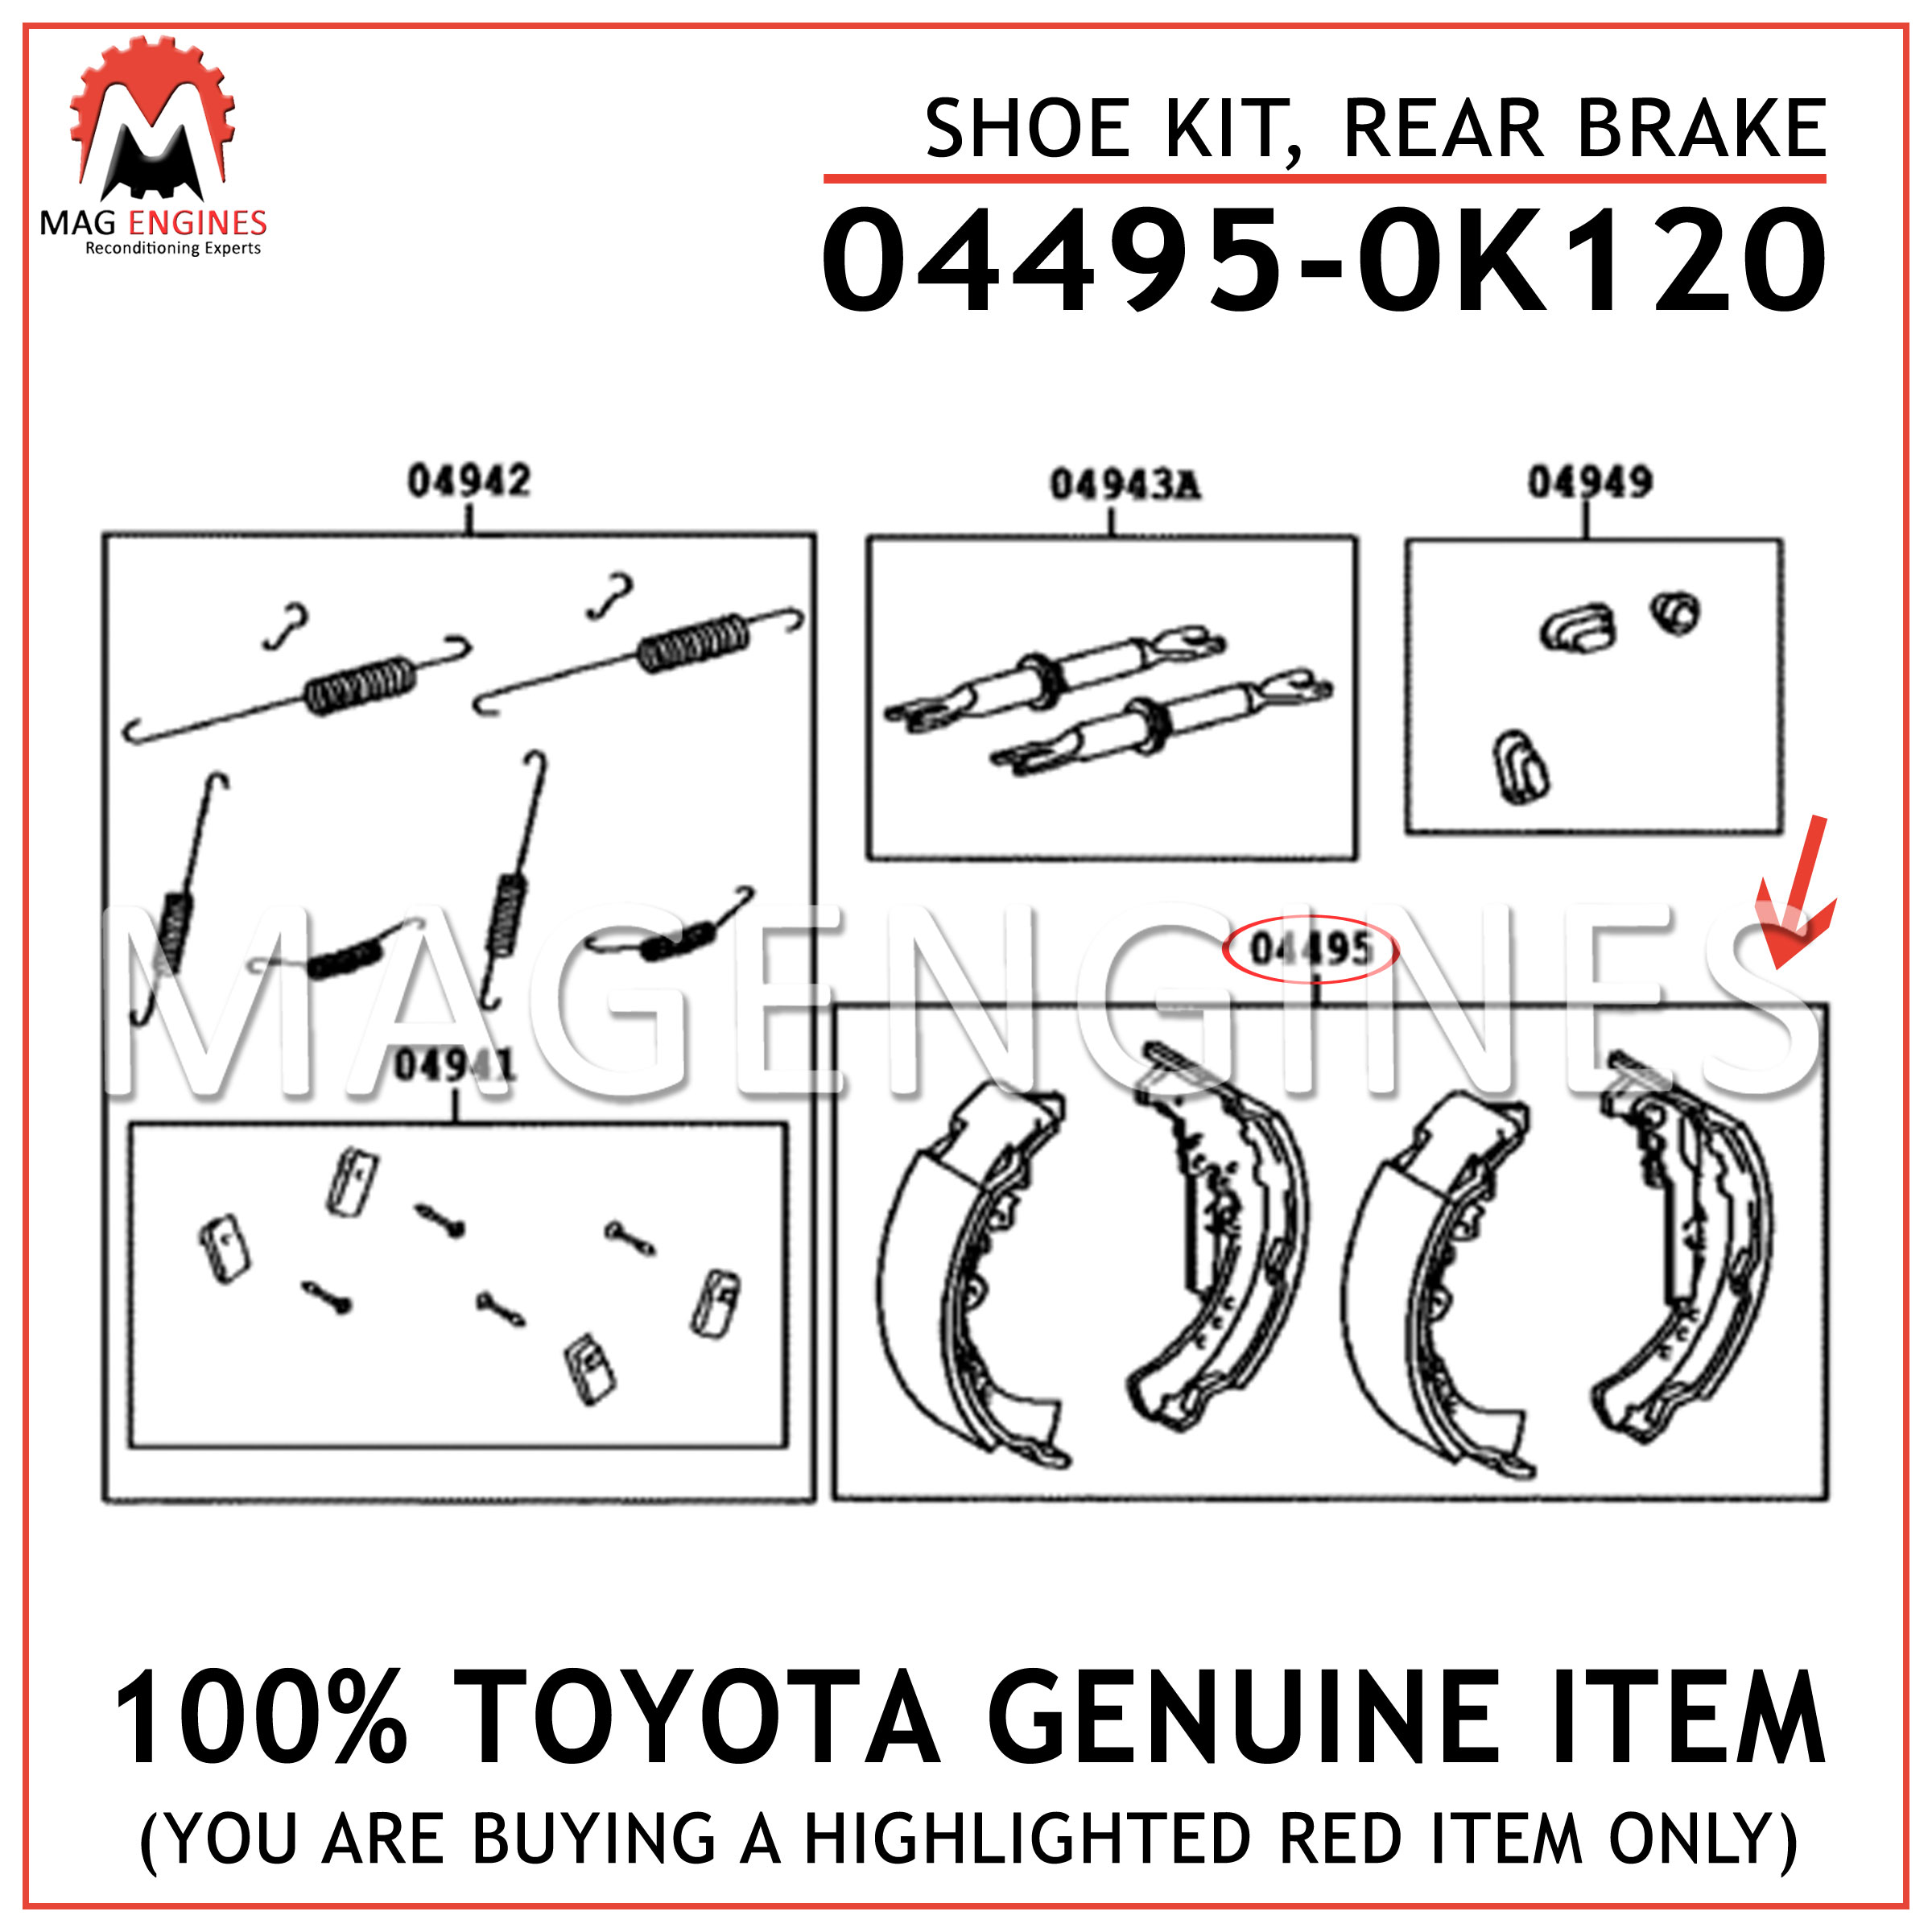 044950K120 Genuine Toyota SHOE KIT REAR BRAKE 04495-0K120